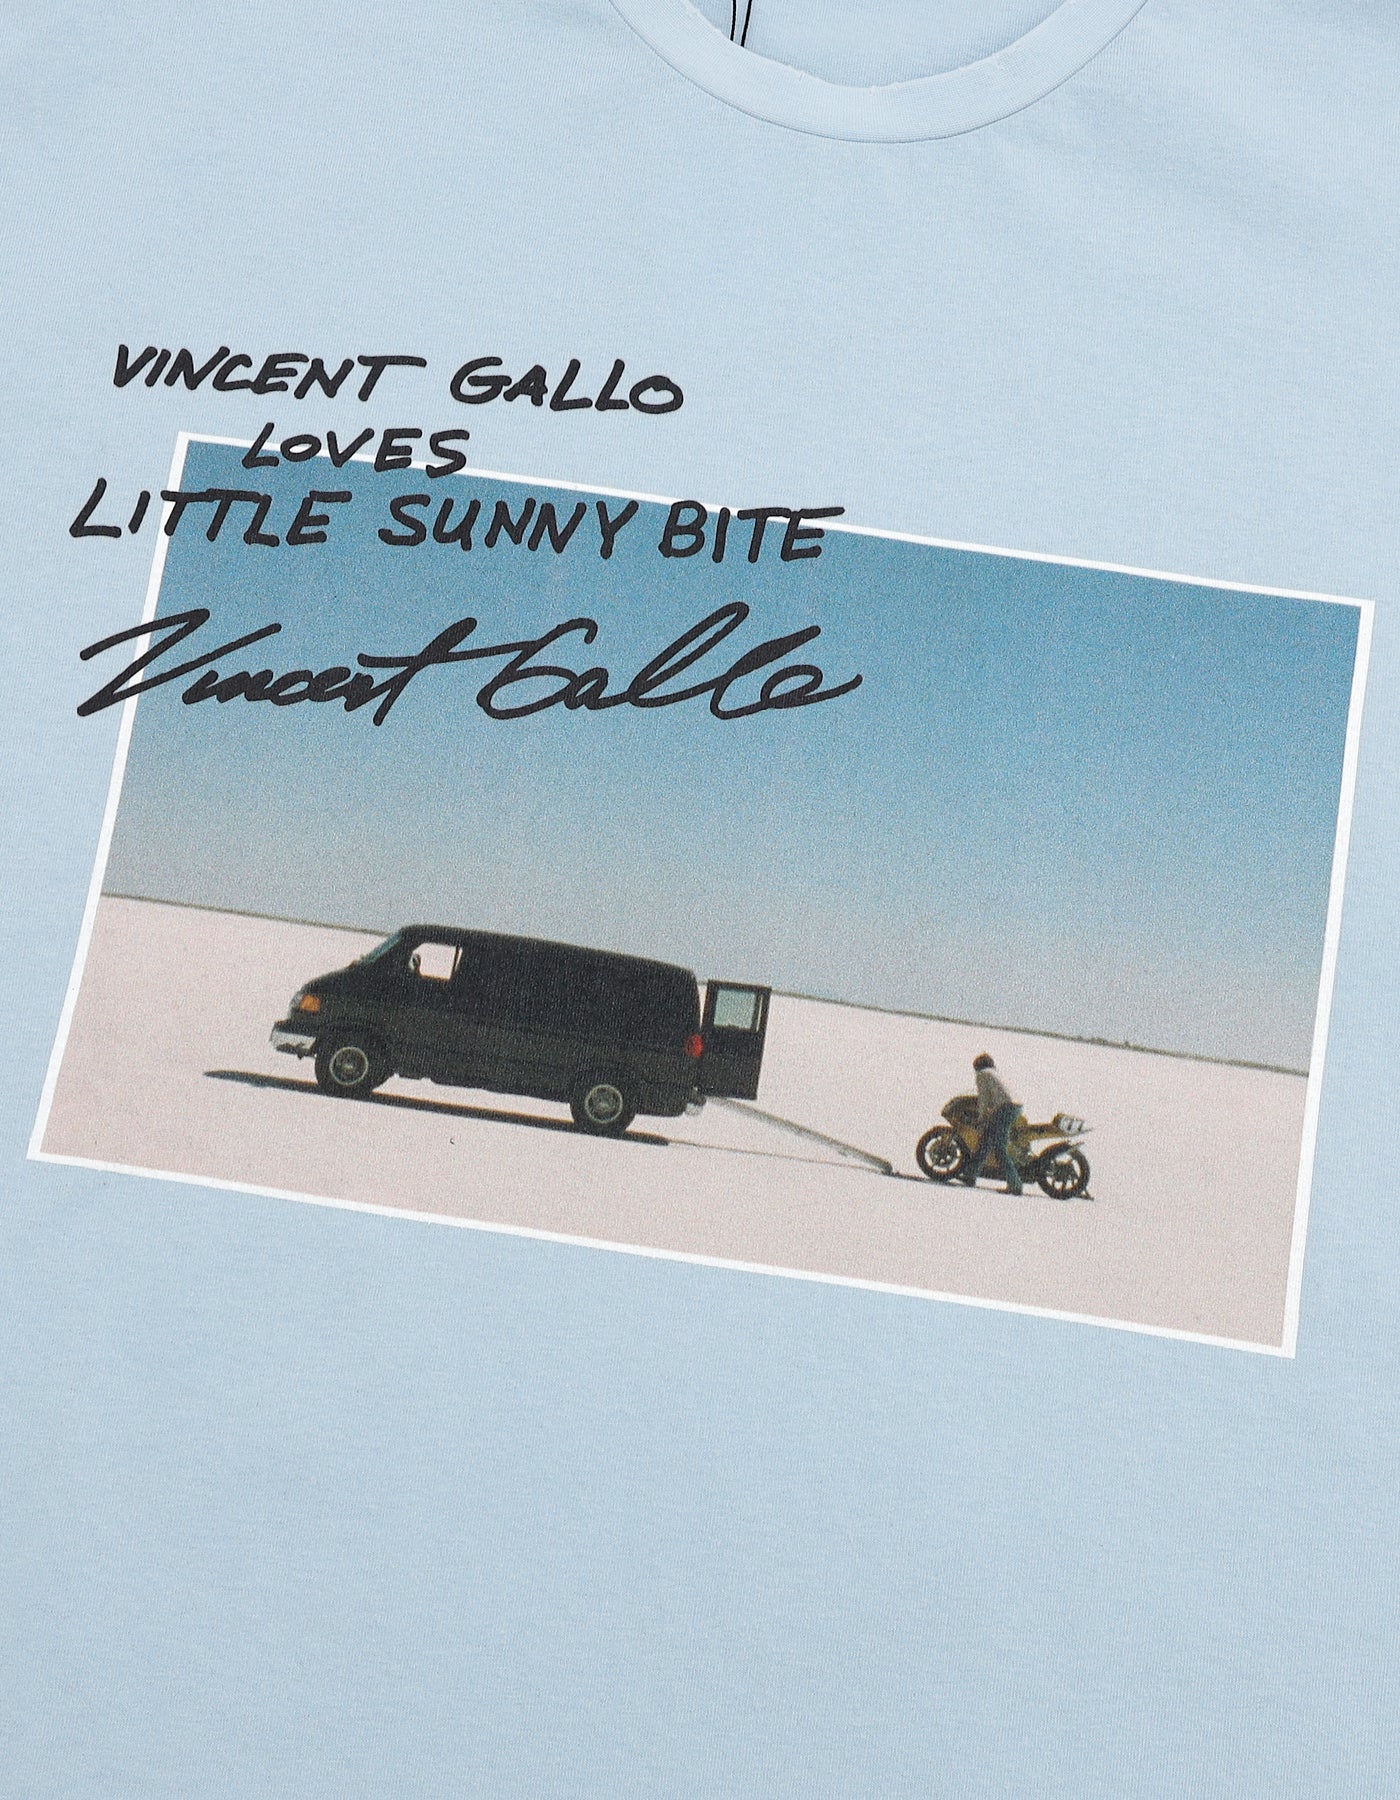 little sunny bite (リトルサニーバイト) Vincent gallo x little